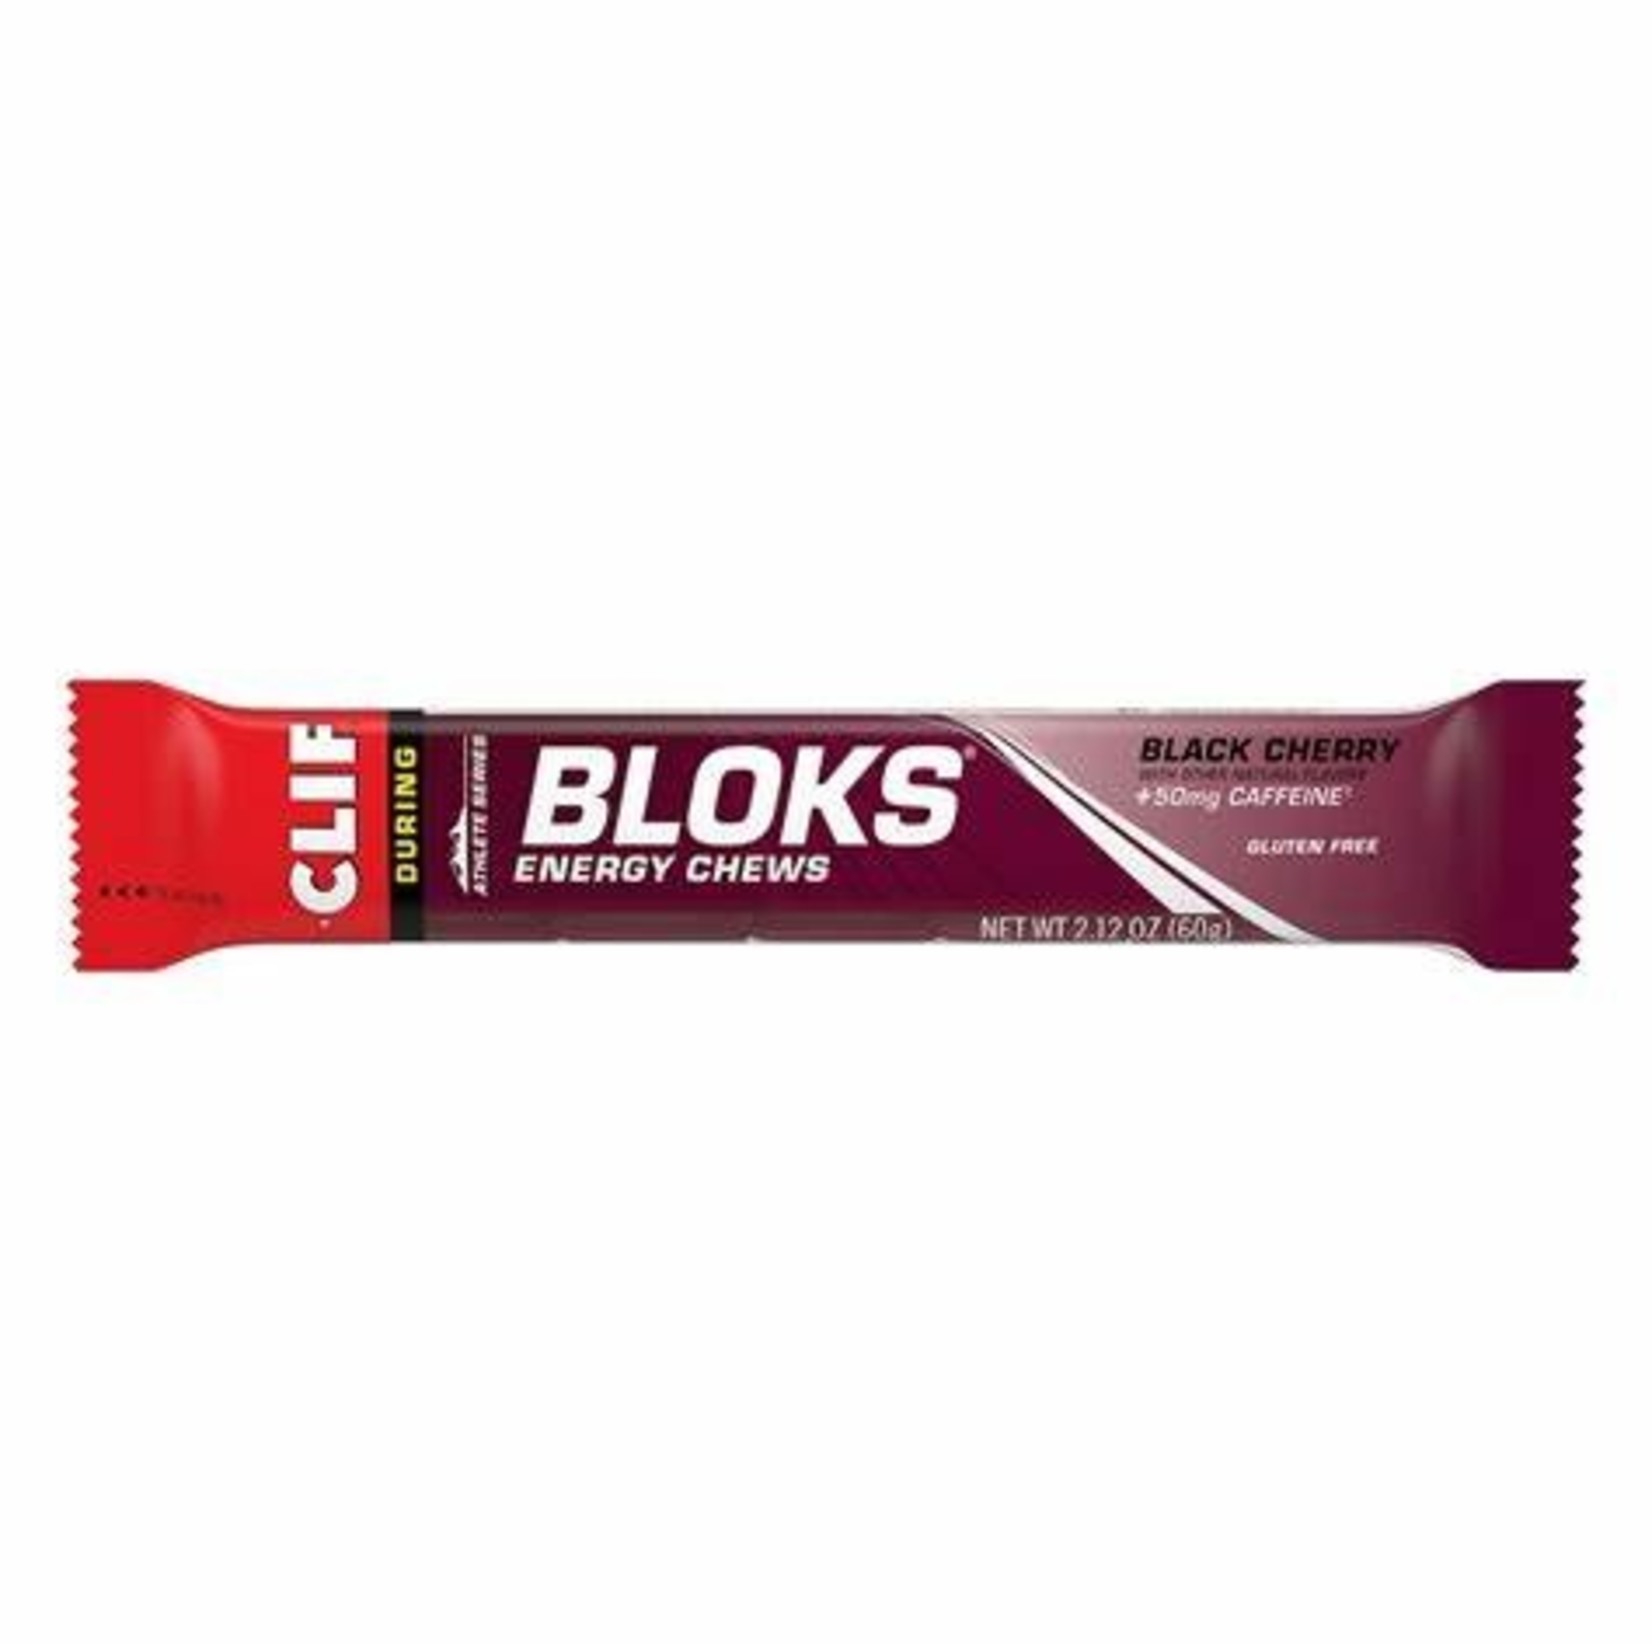 Clif blocks energy chews black cherry